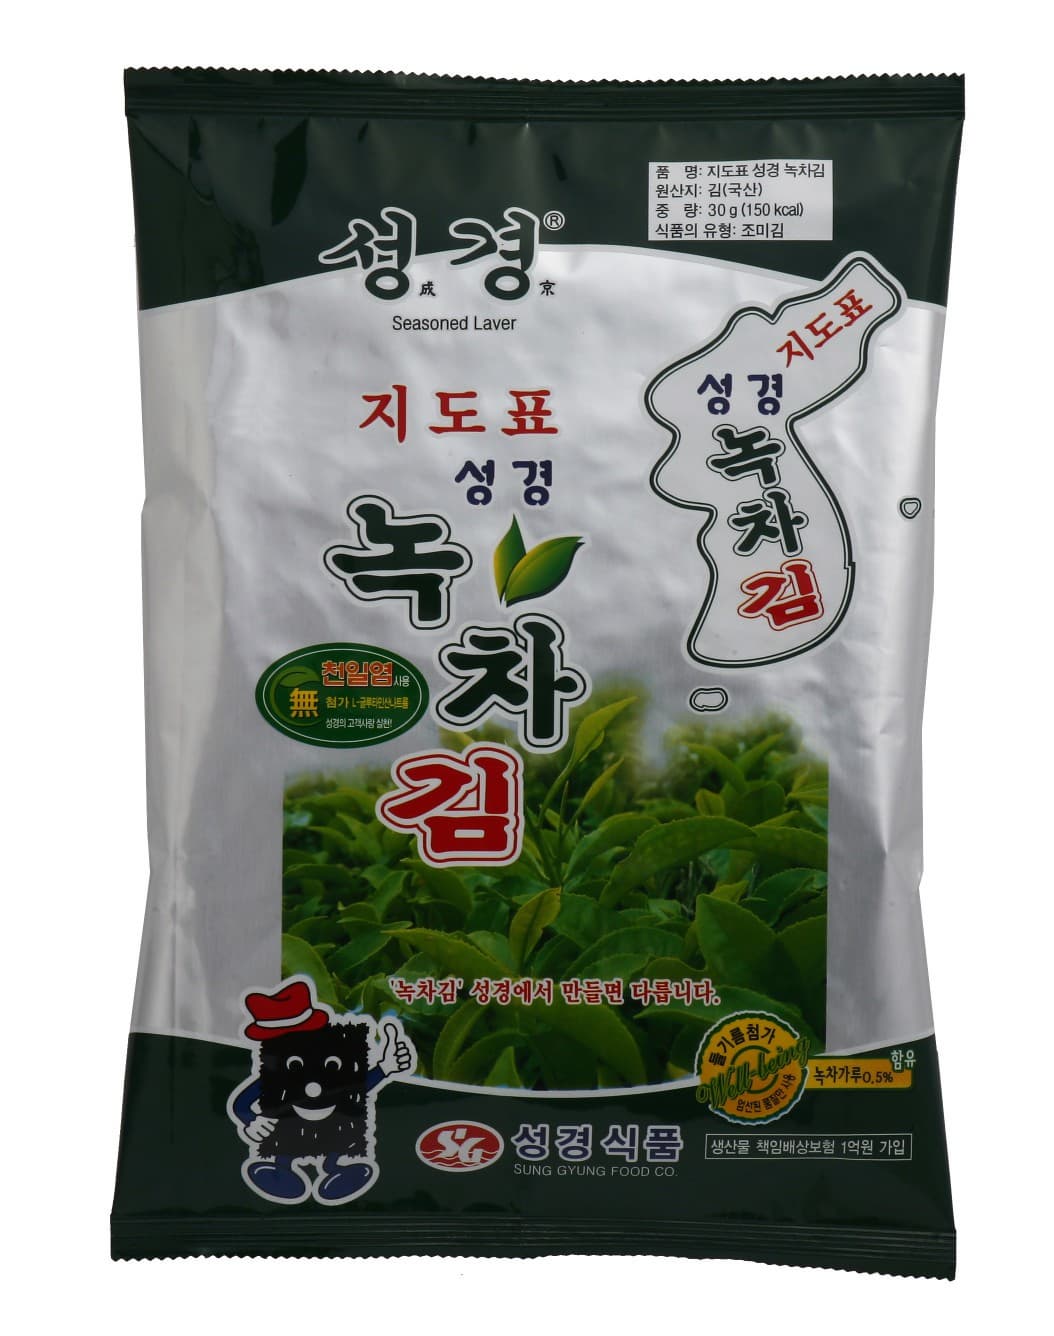 Korean seasoned laver snack Sung Gyung Greentea Laver